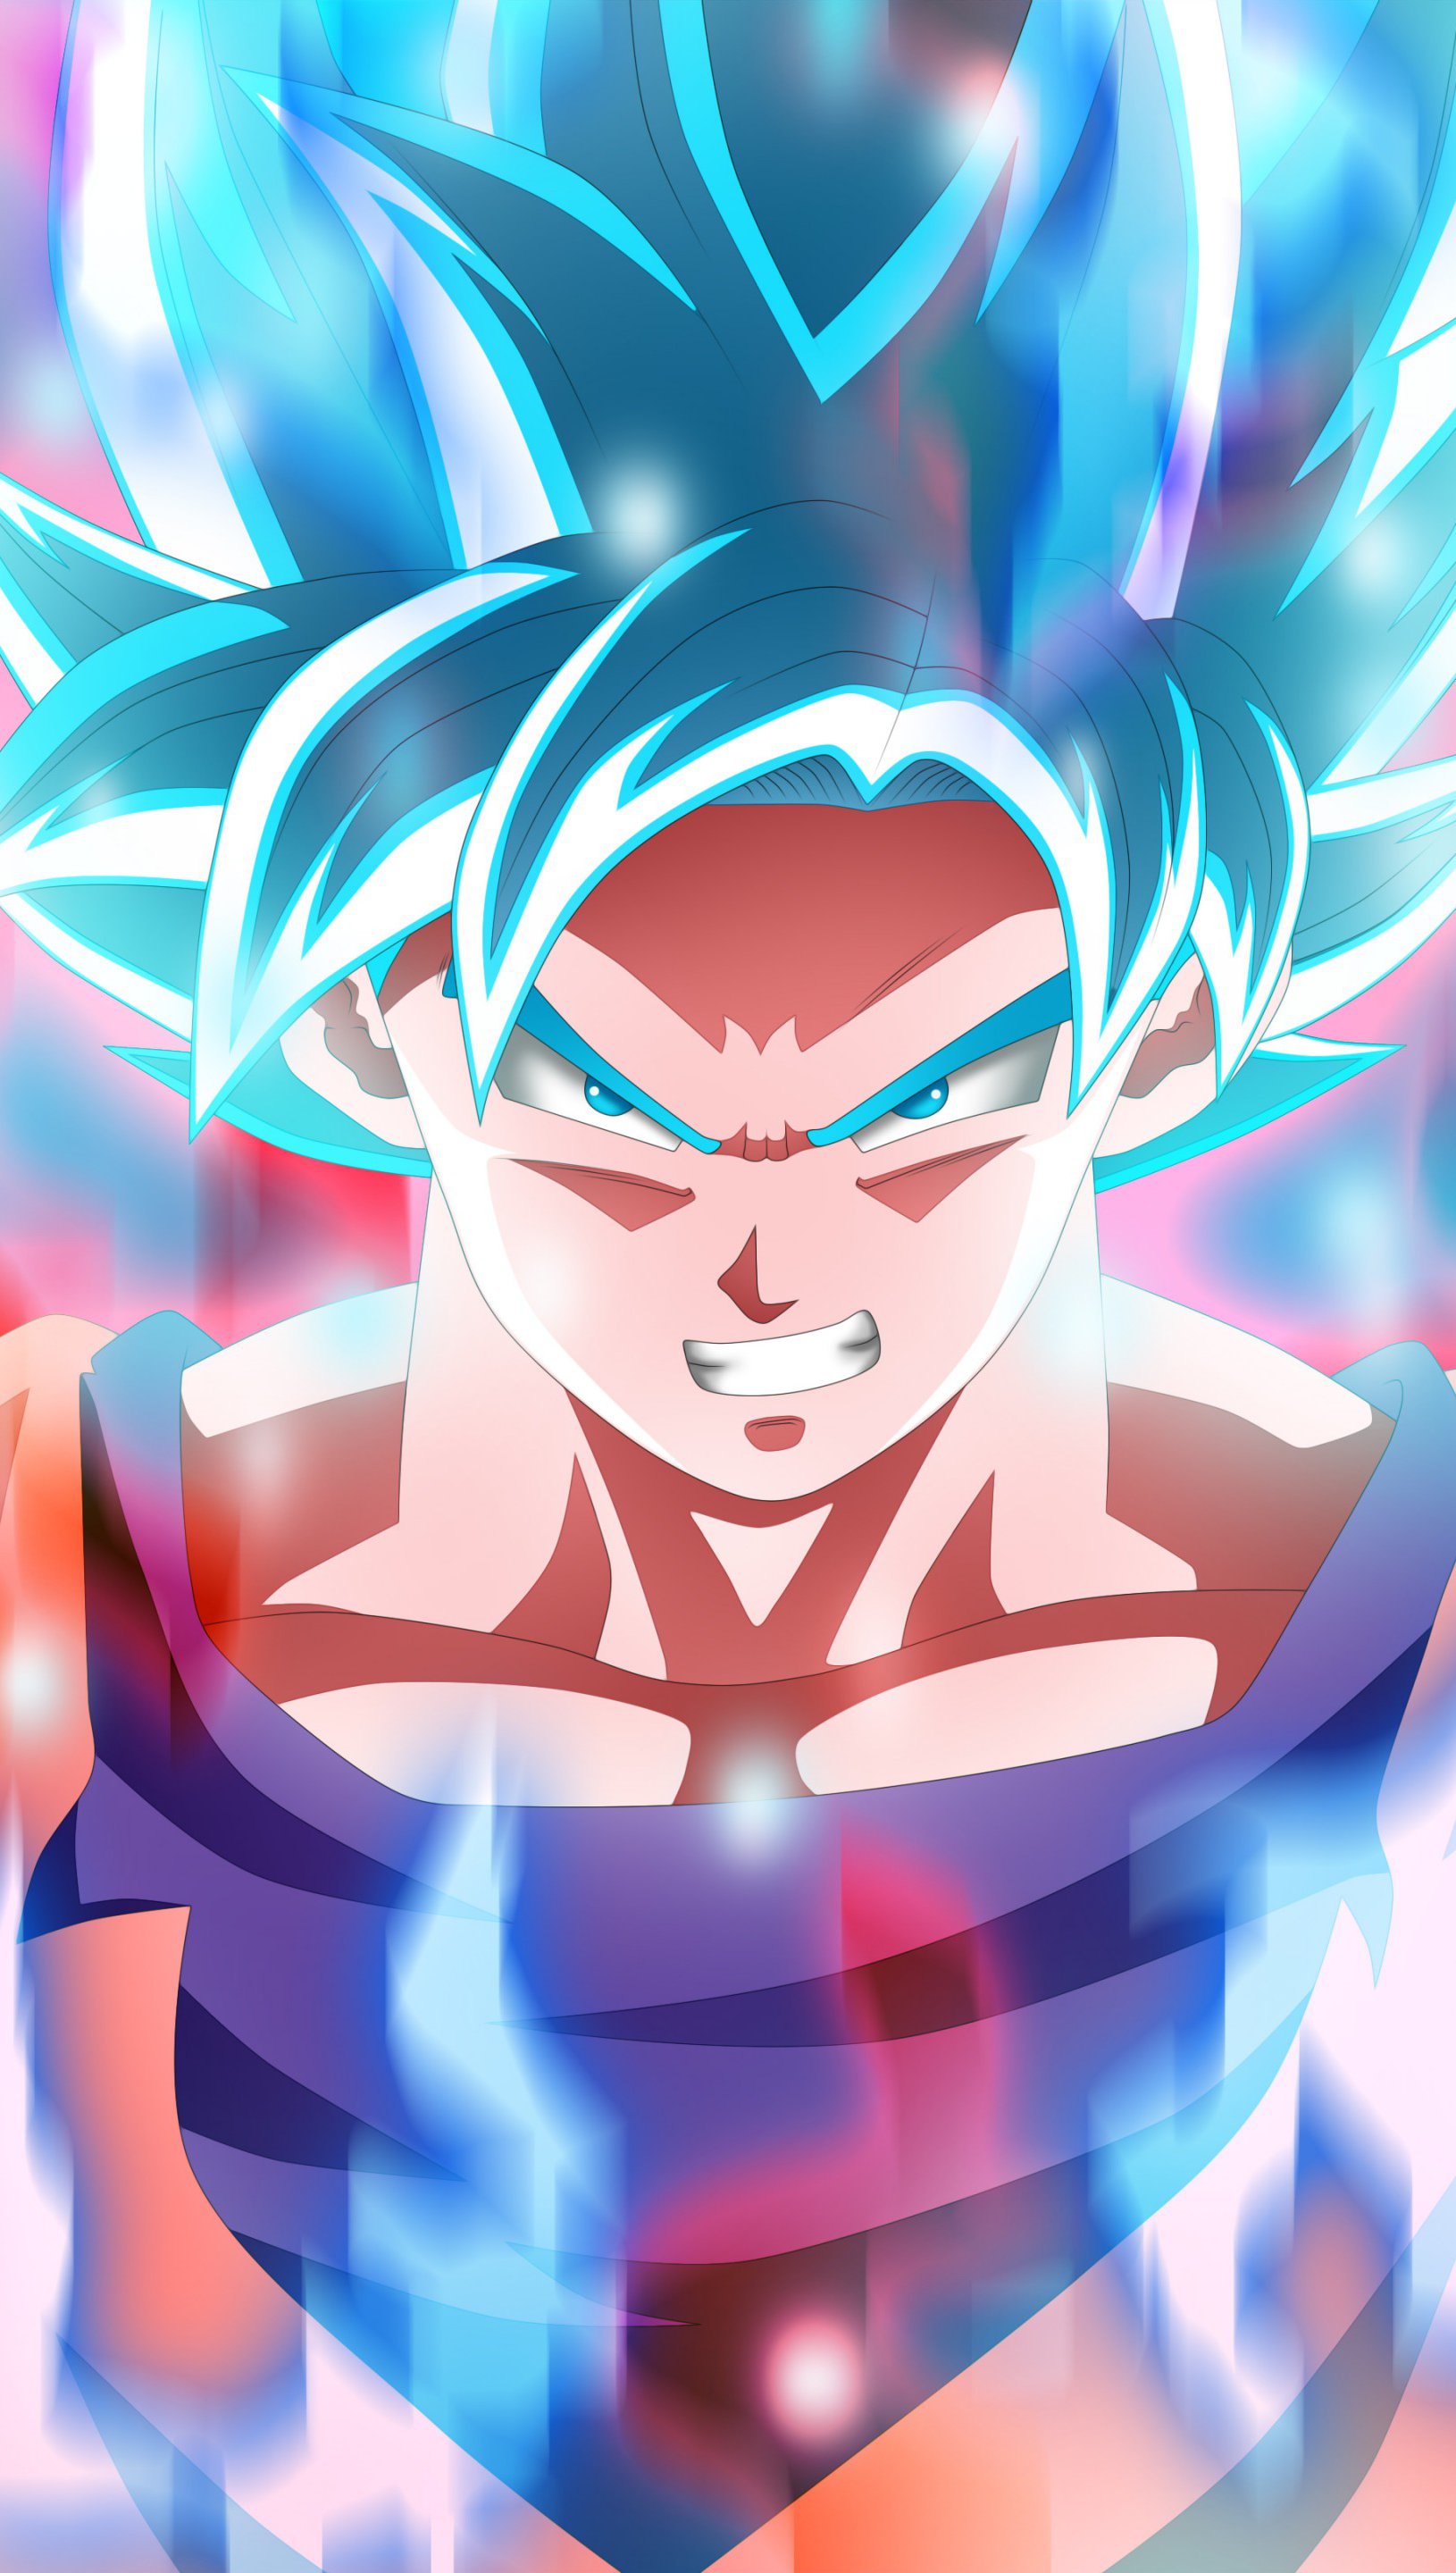 Goku Super Saiyan Blue from Dragon Ball Super Anime Wallpaper 5k Ultra HD  ID:3736